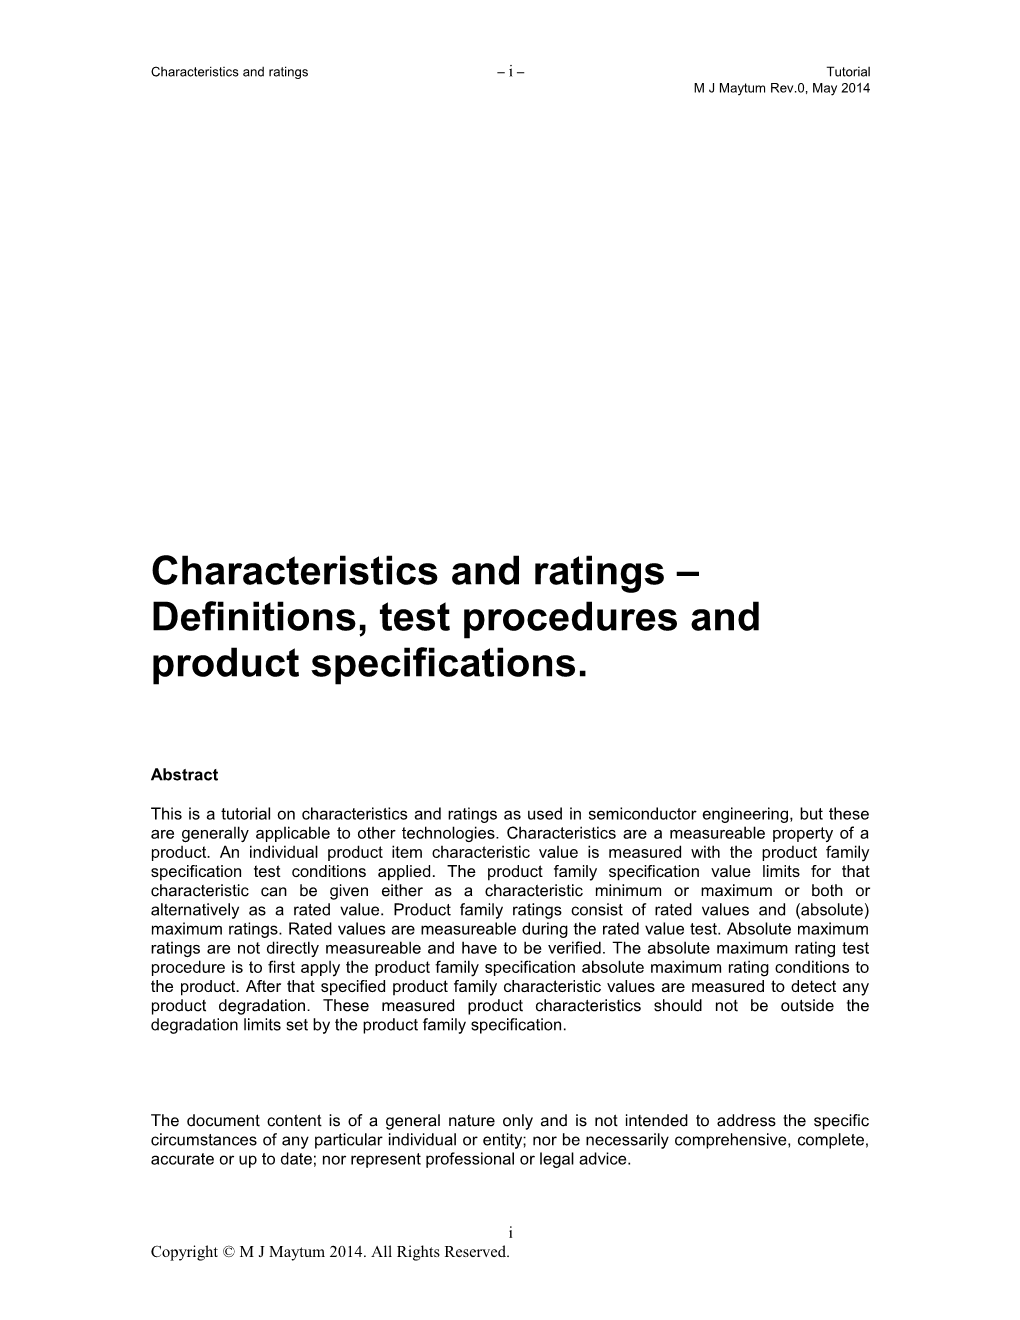 IEEE Standards - Draft Standard Template